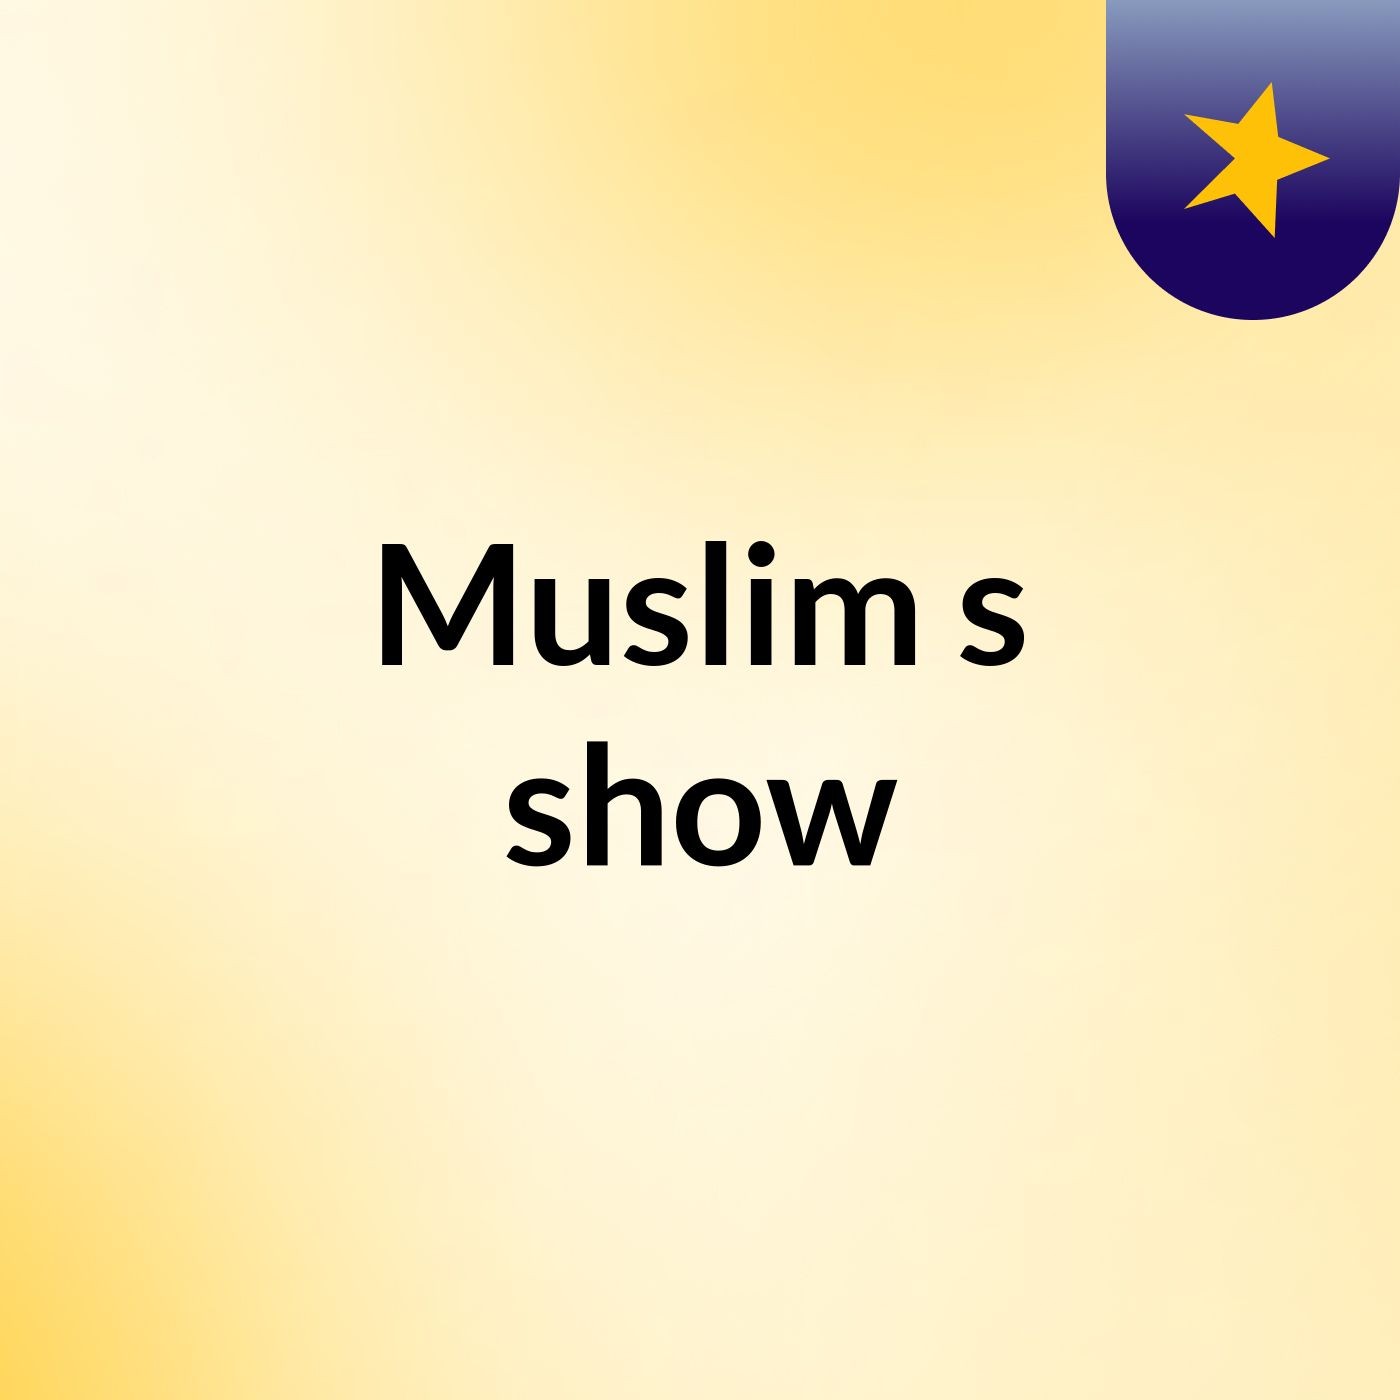 Muslim's show